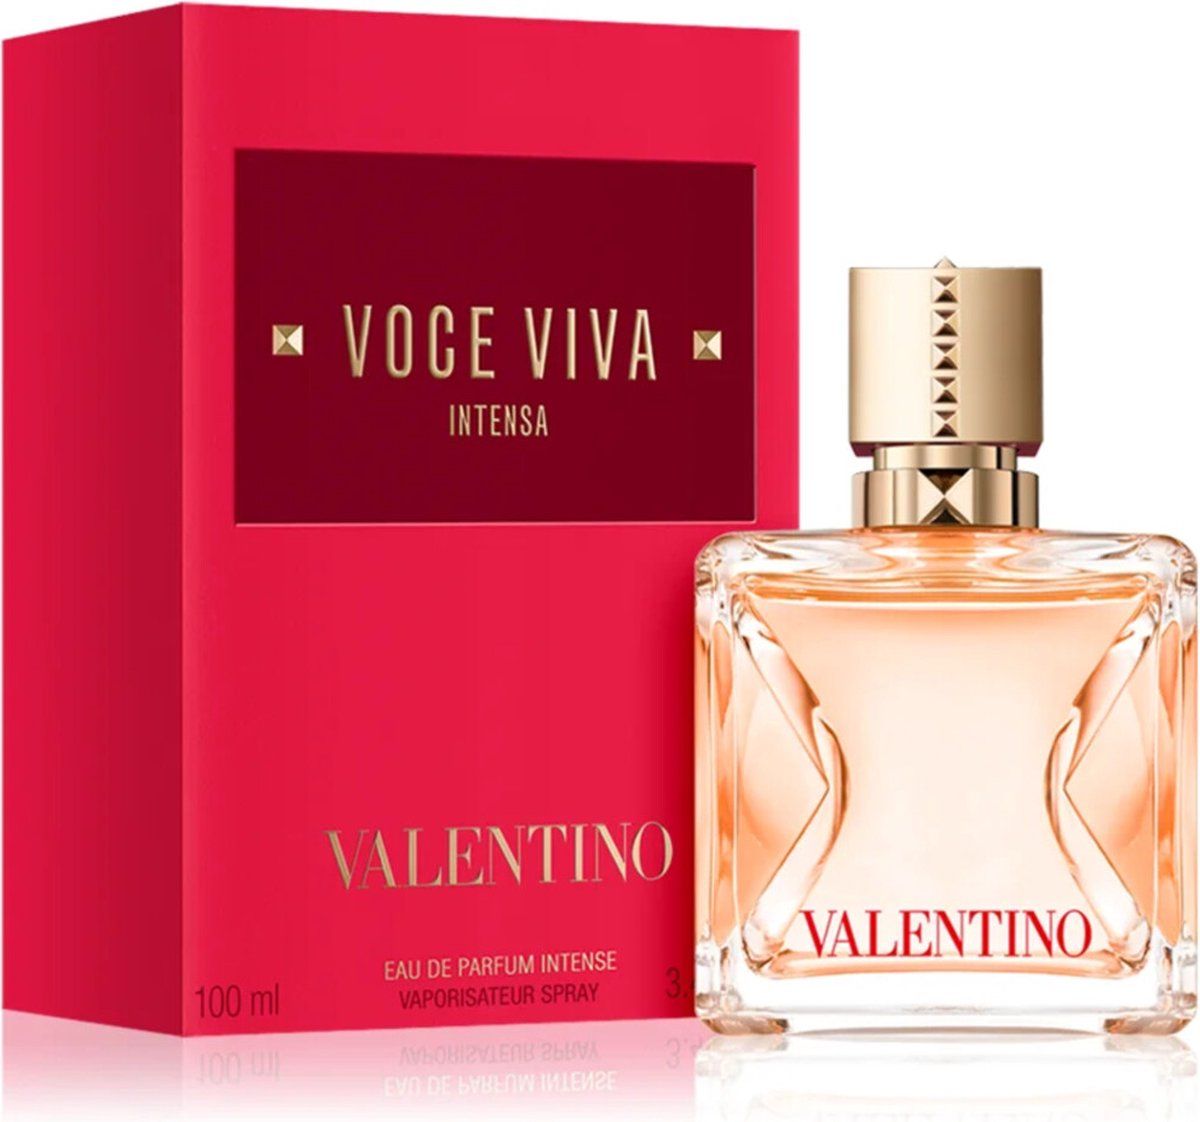 Valentino Voce Viva Eau de parfum spray intense 100 ml